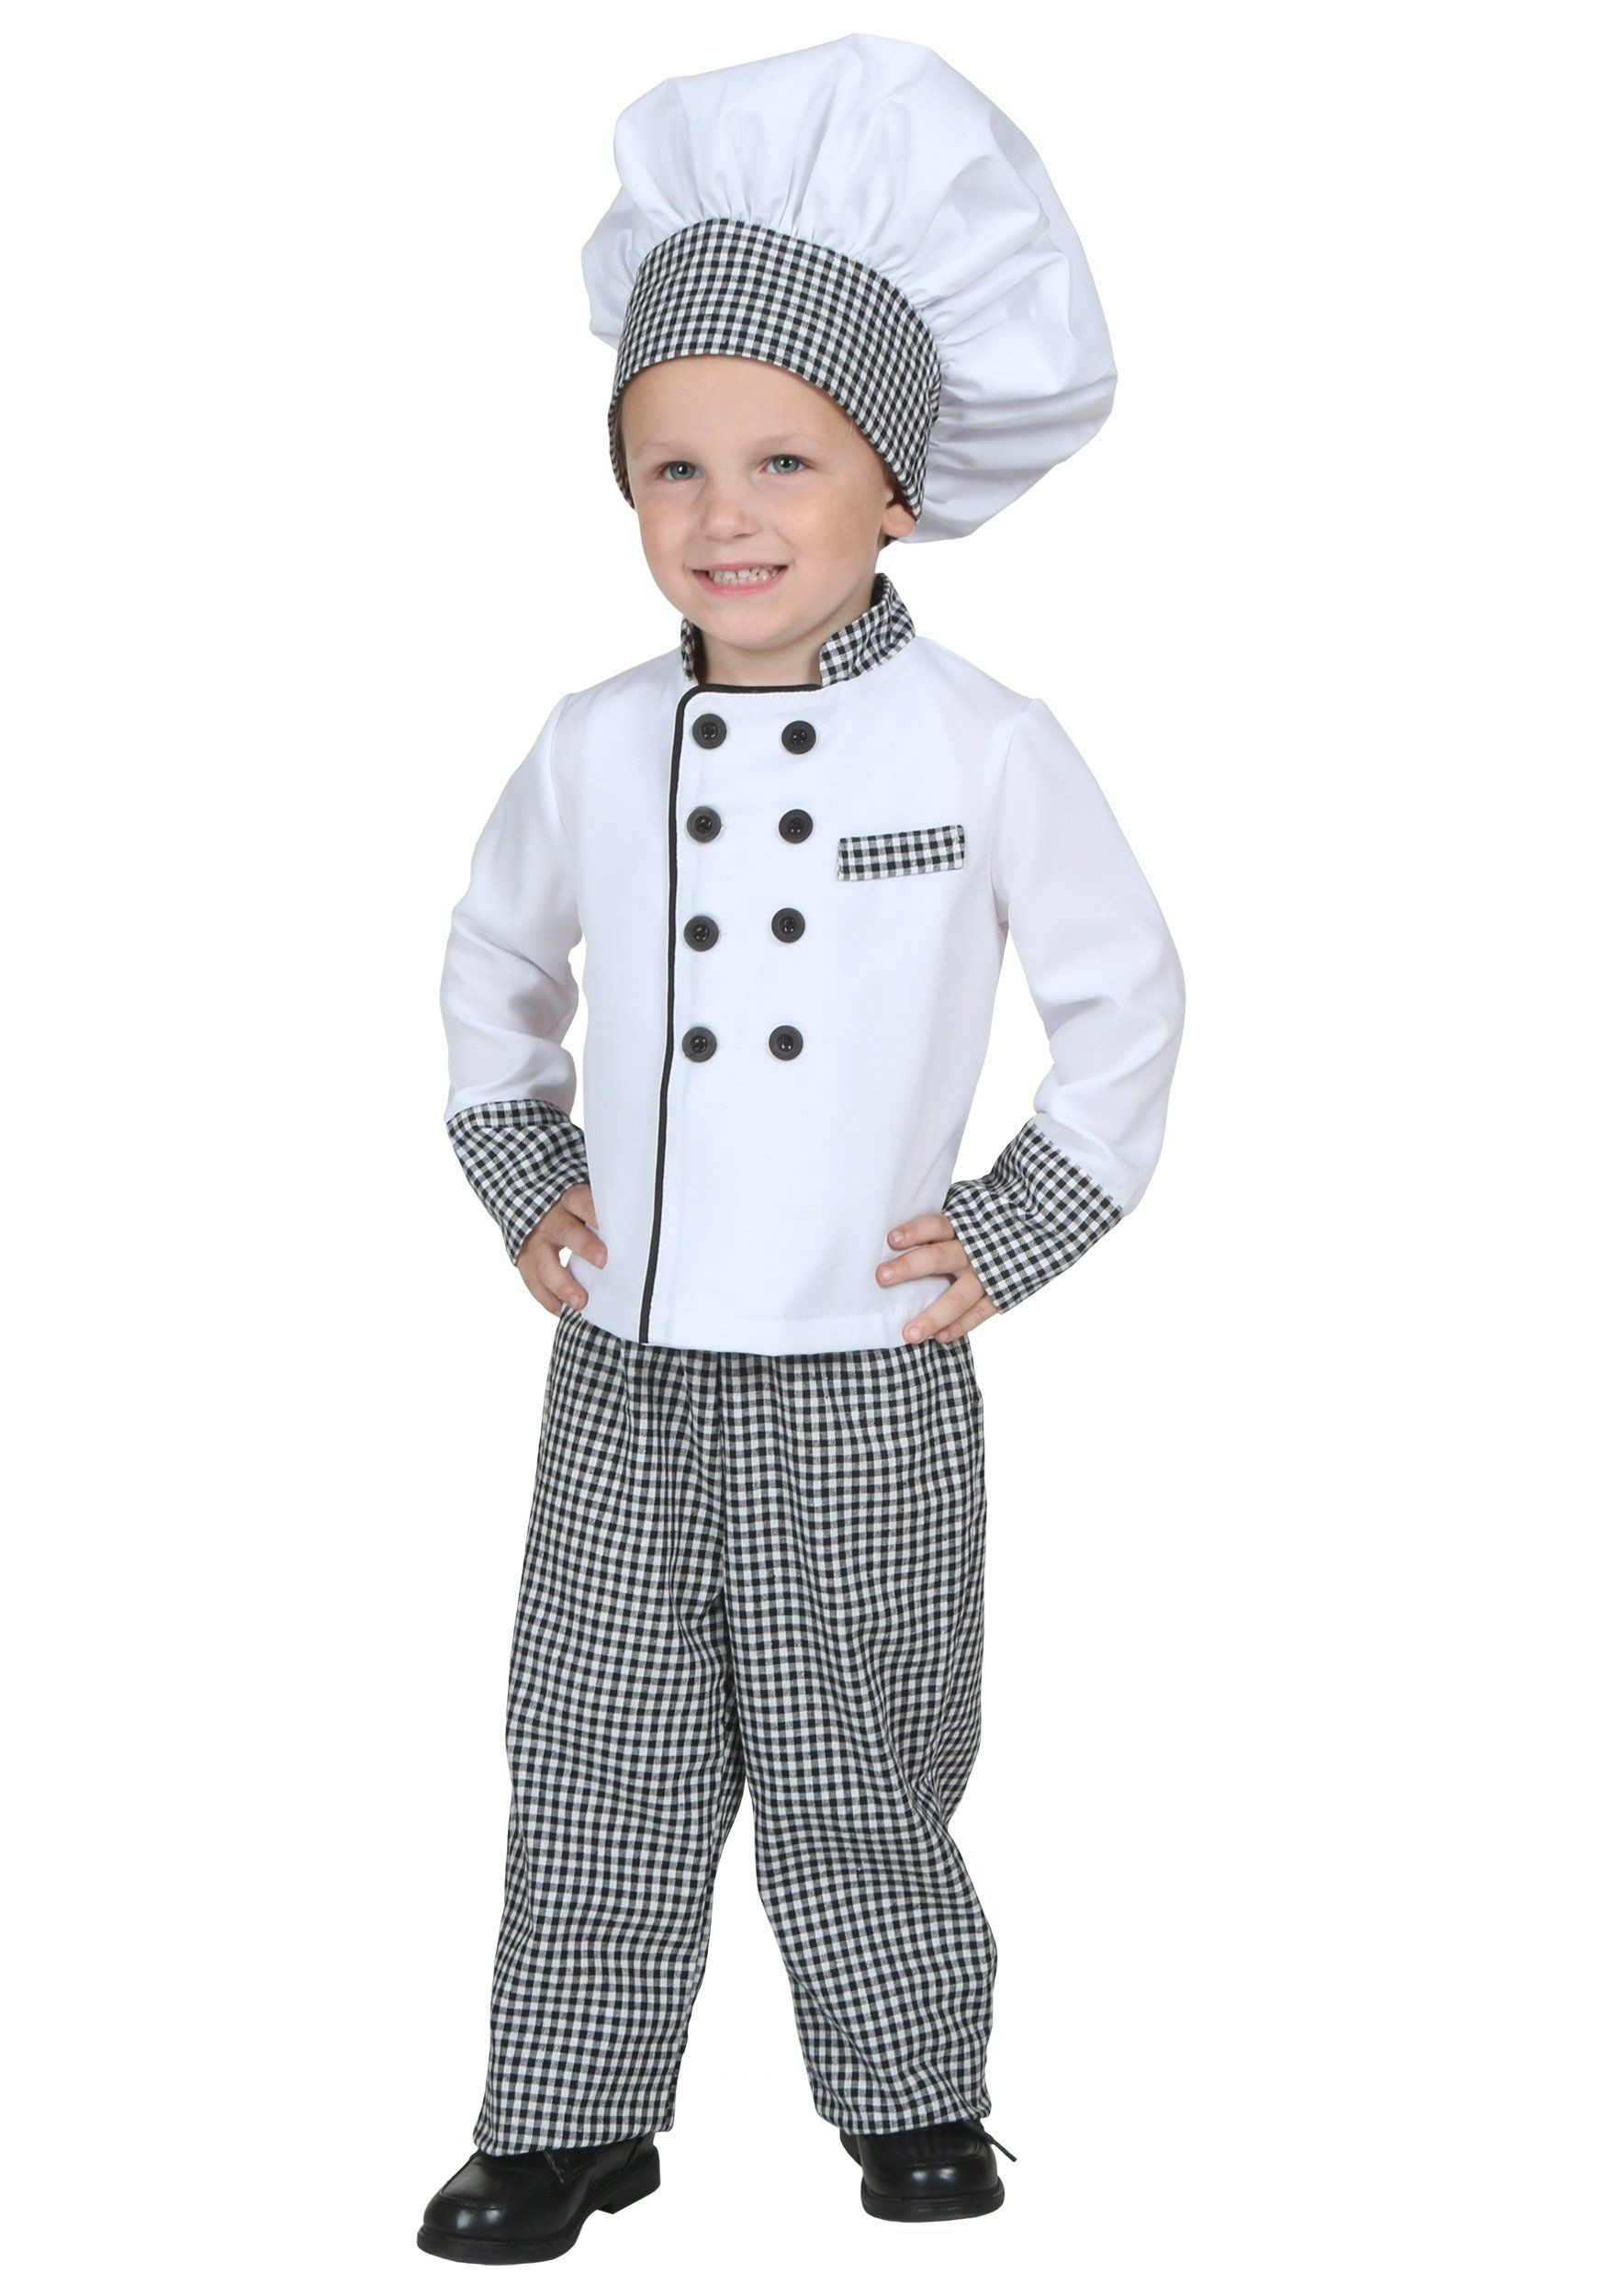 DIY Chef Costume
 Toddler Chef Costume 4T